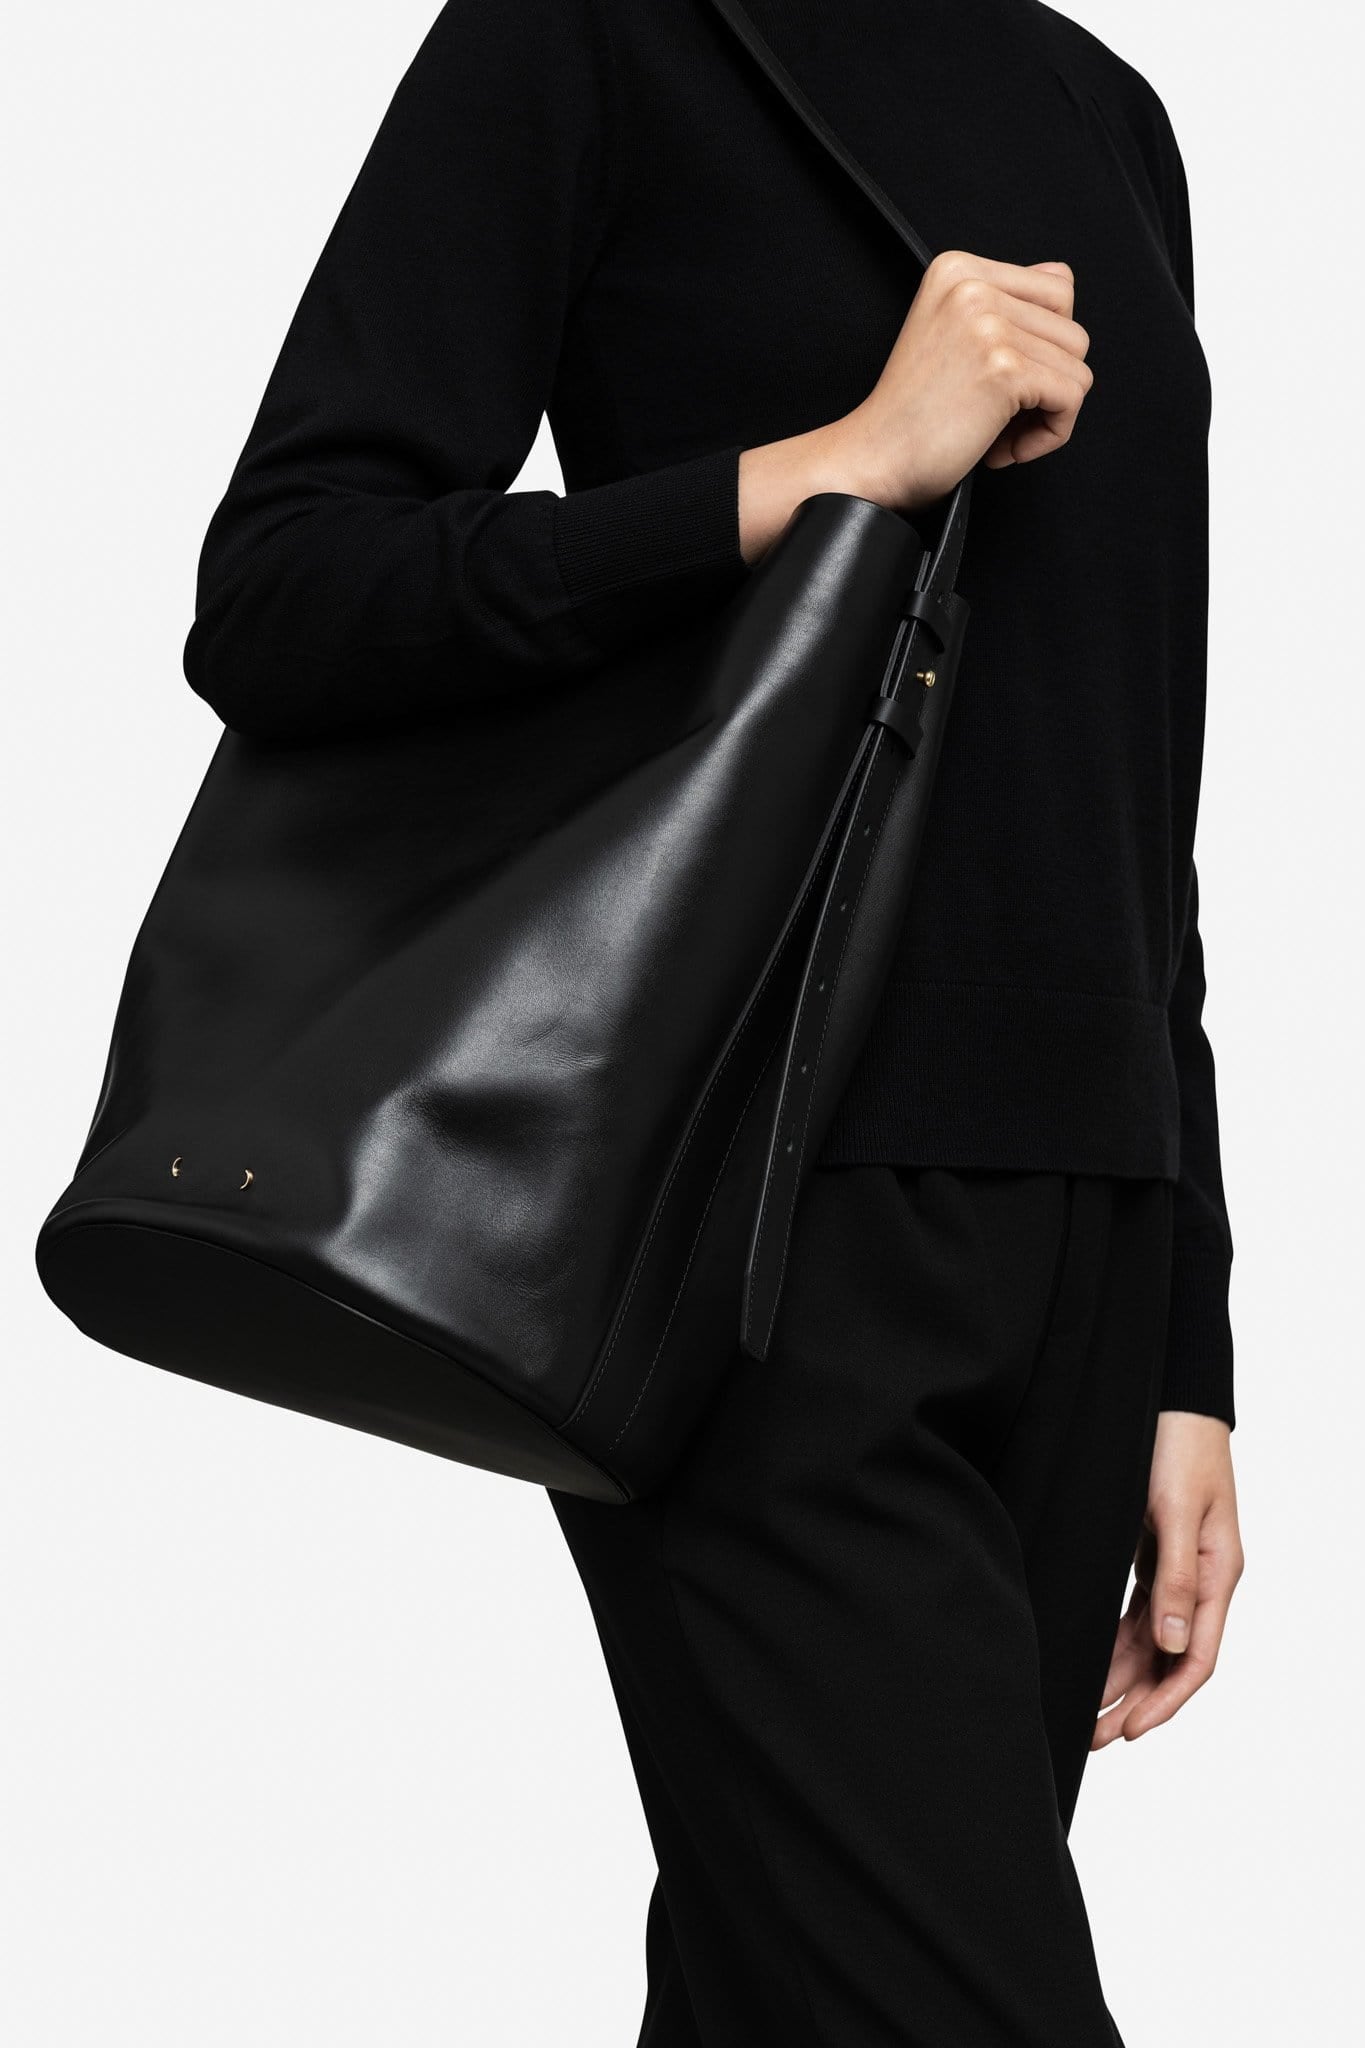 Soft aniline leather shoulder bag - AB 91.1 in black by PB0110 – PB 0110